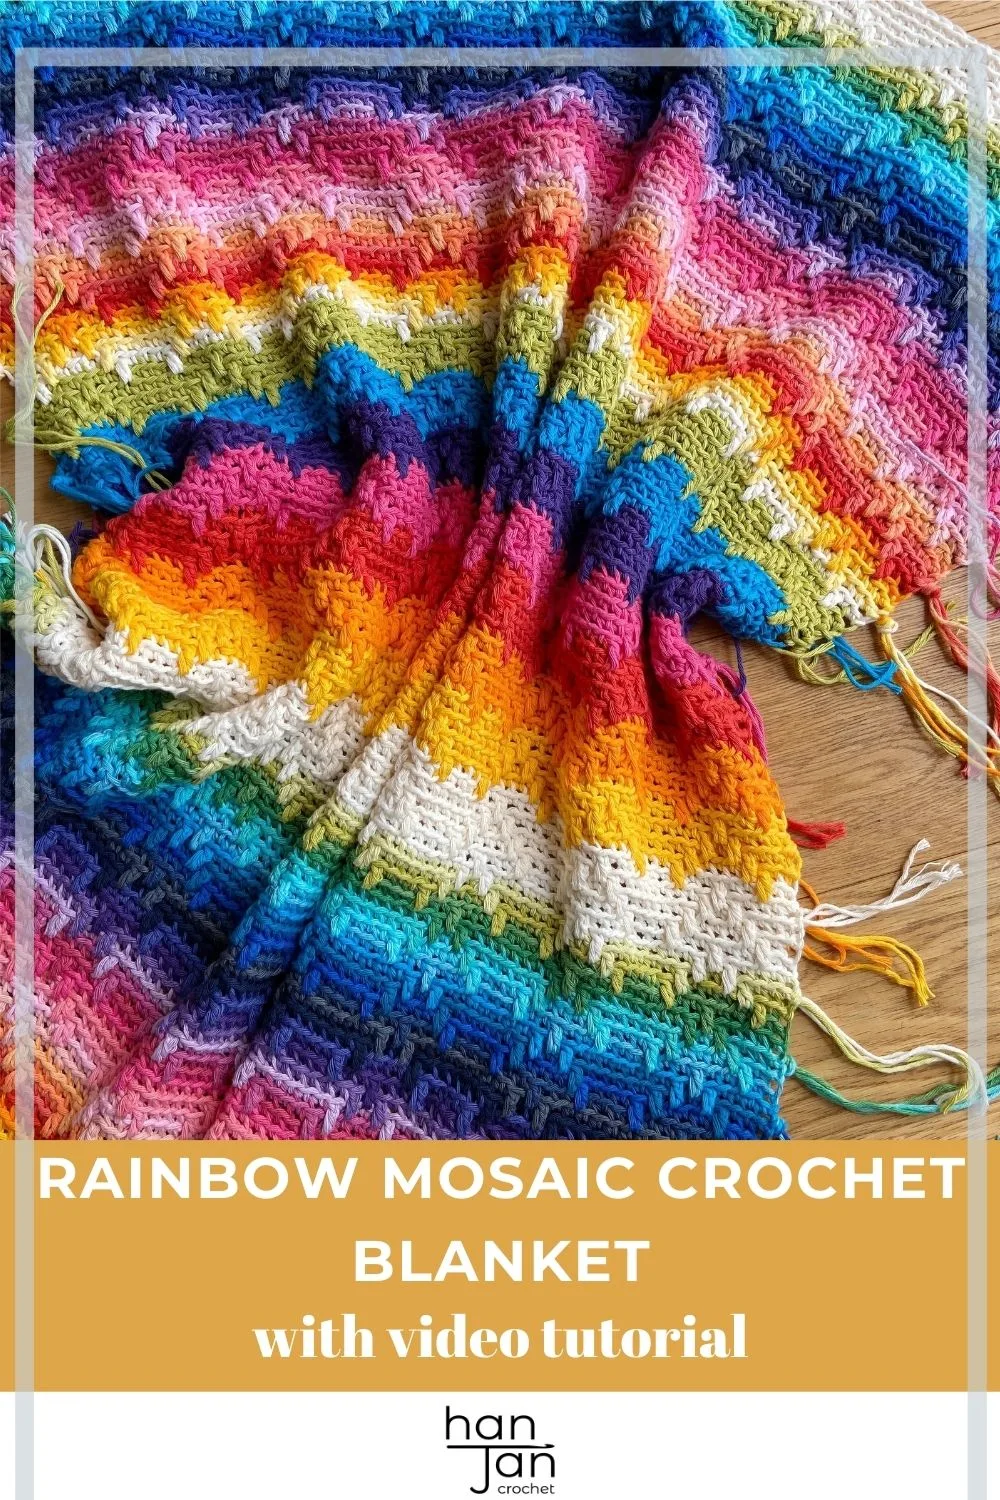 rainbow crochet blanket using overlay mosaic crochet technique with tassels laid on wooden floor